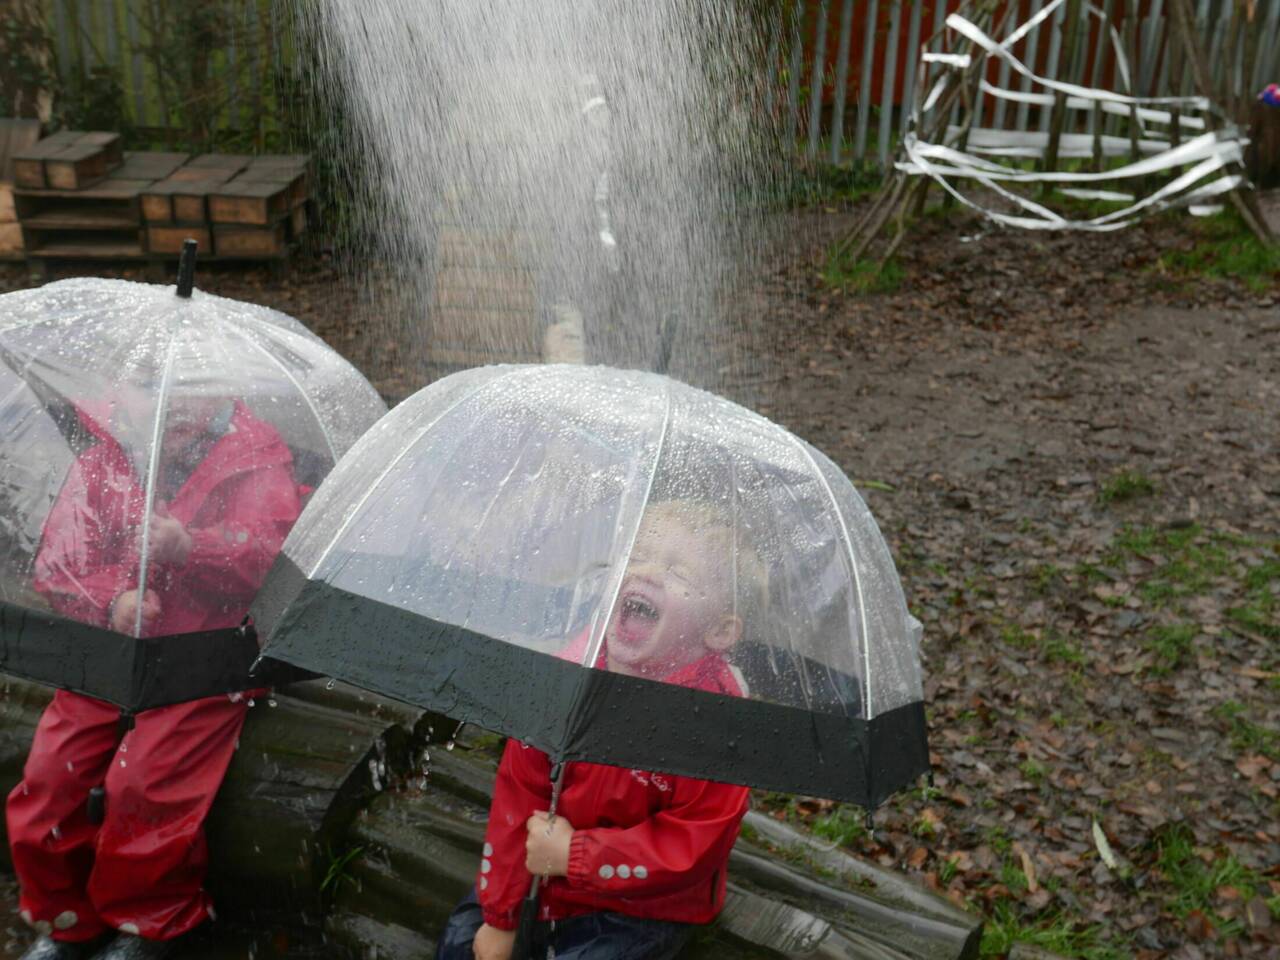 Umbrella/ Water play